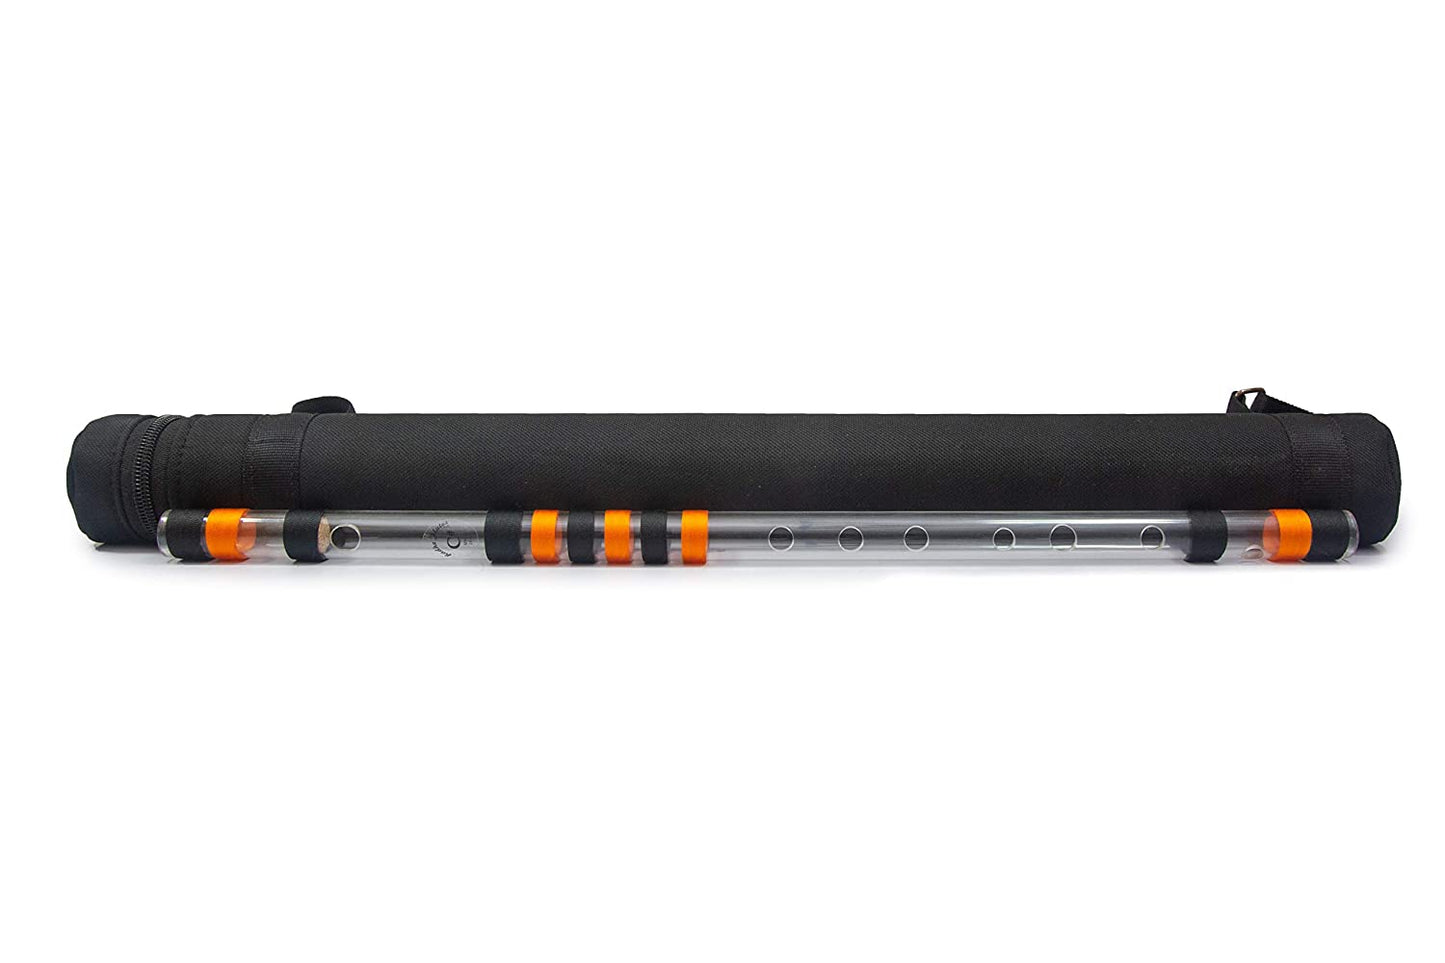 Radhe Flutes Acrylic Fiber C Sharp Bansuri Middle Octave with Hard Cover 18"inches